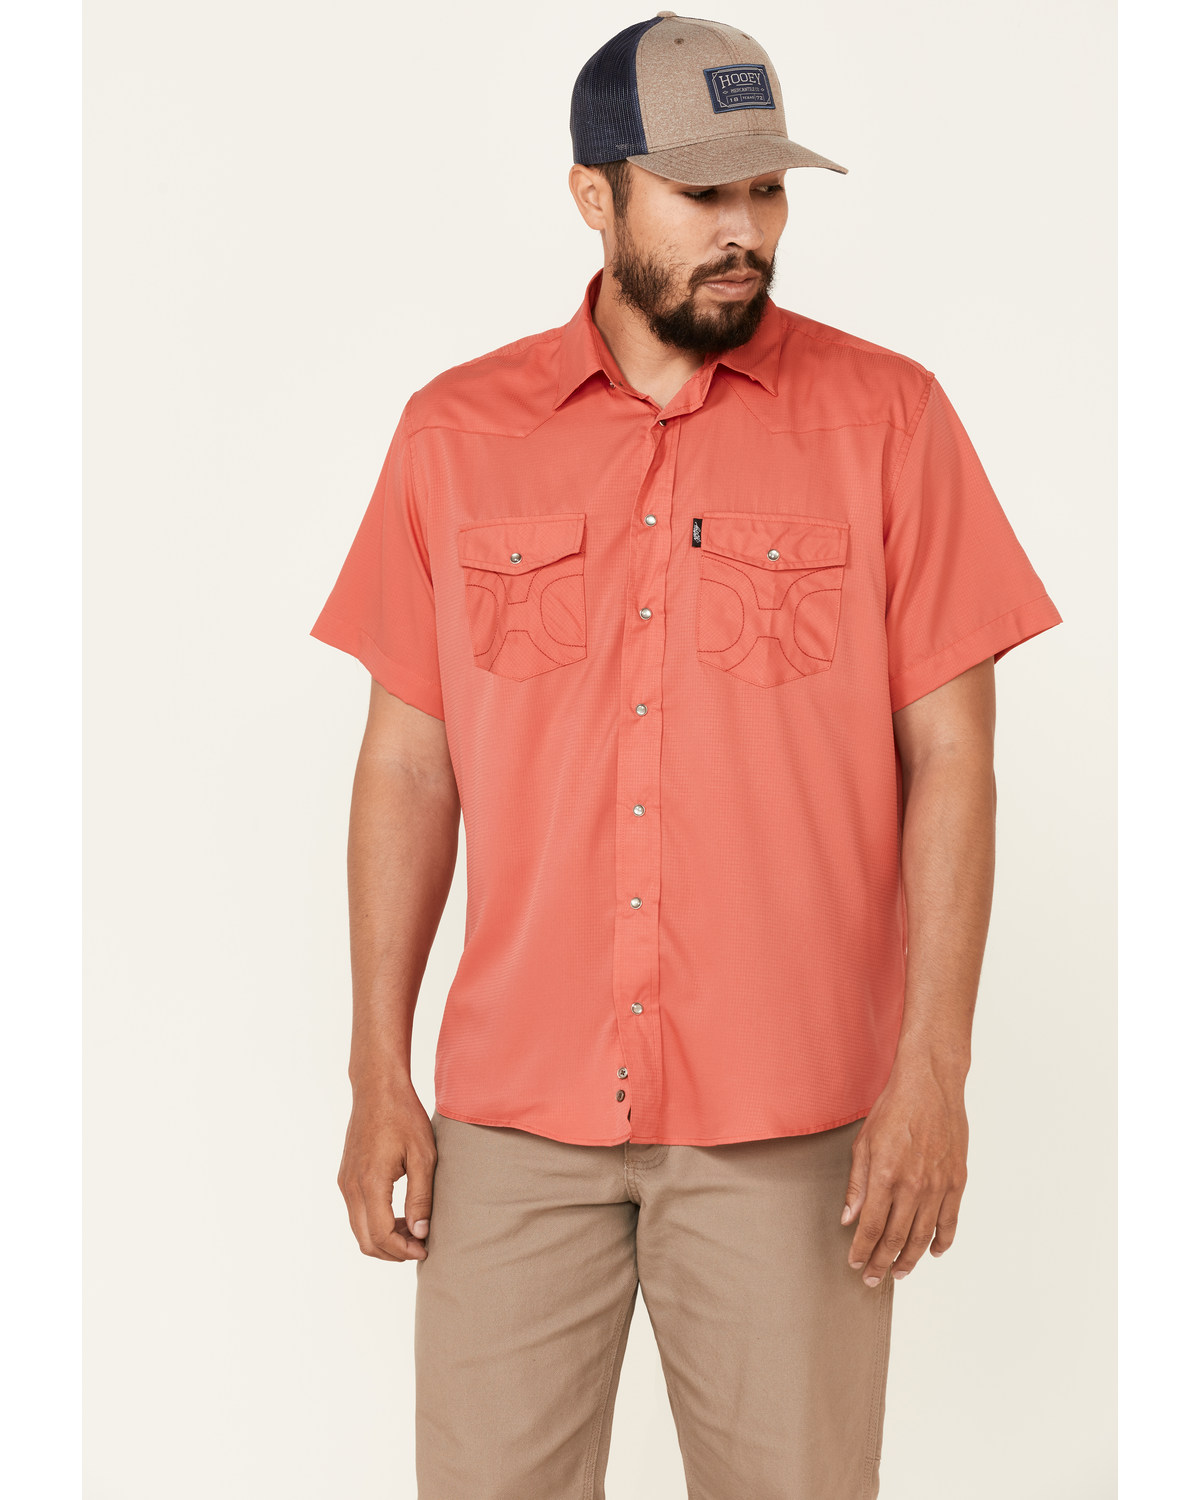 Hooey Men's Solid Habitat Sol Short Sleeve Pearl Snap Western Shirt